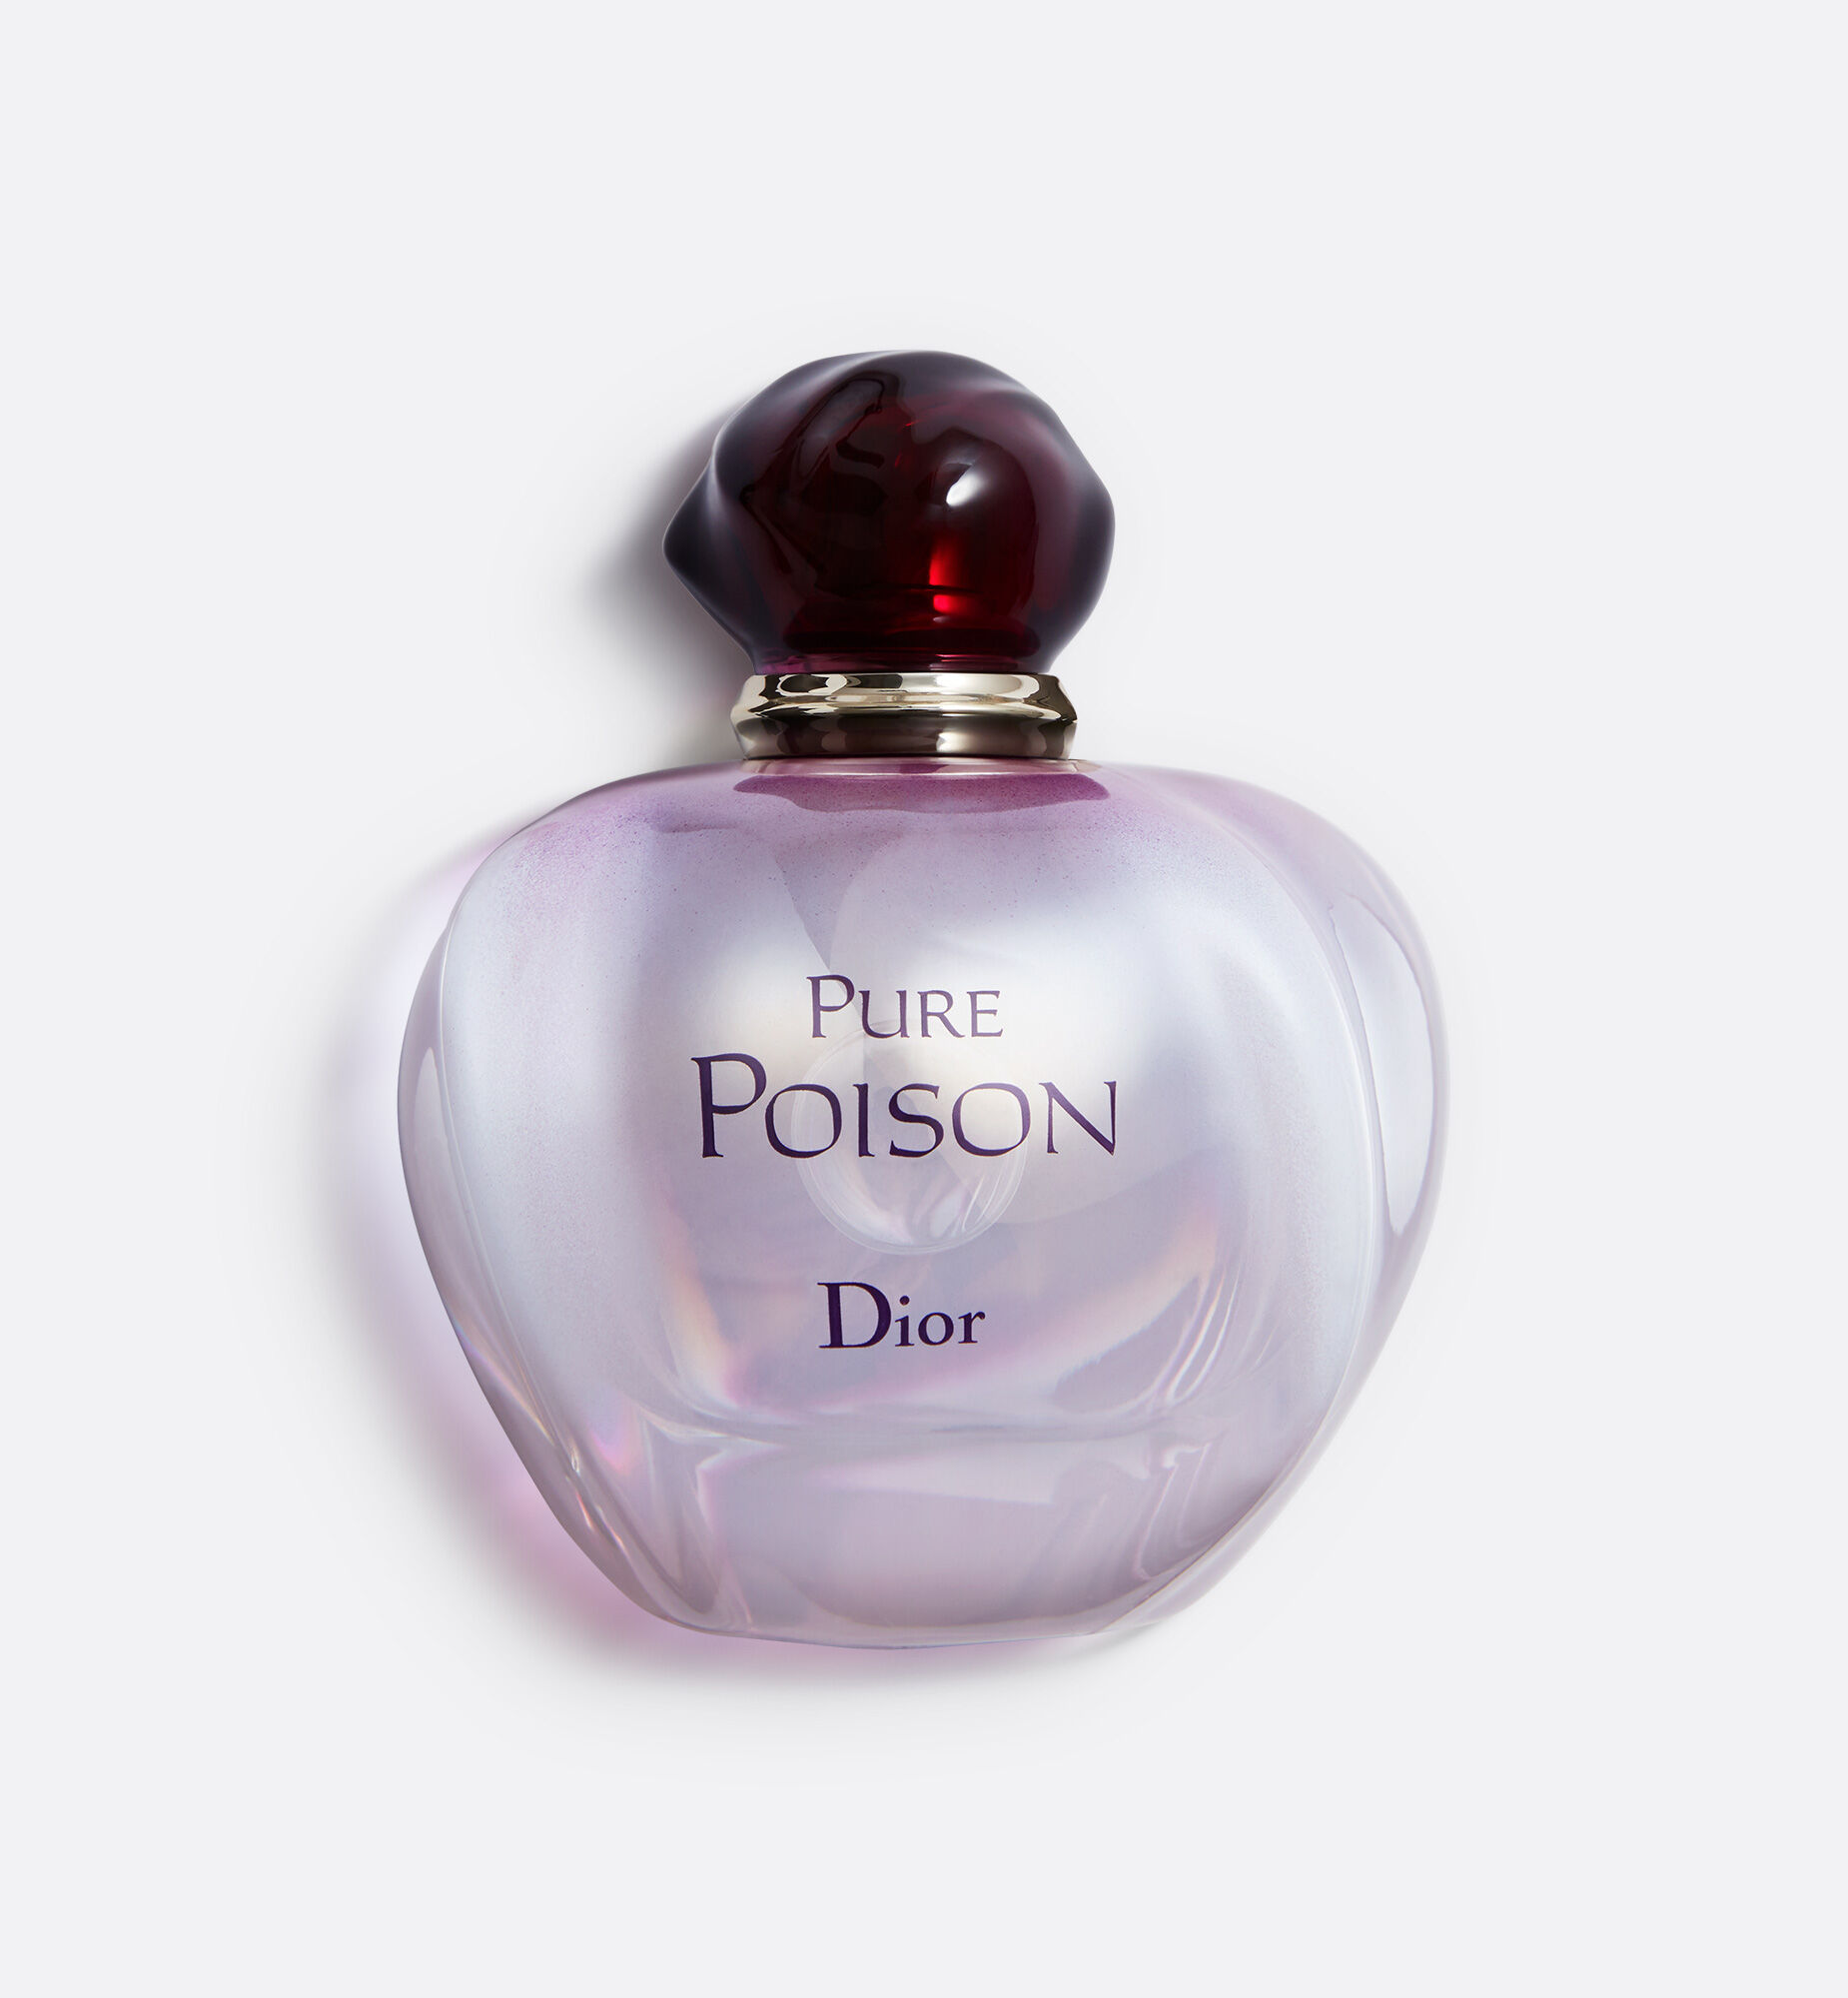 Chi tiết hơn 62 về poison dior eau de parfum hay nhất  cdgdbentreeduvn